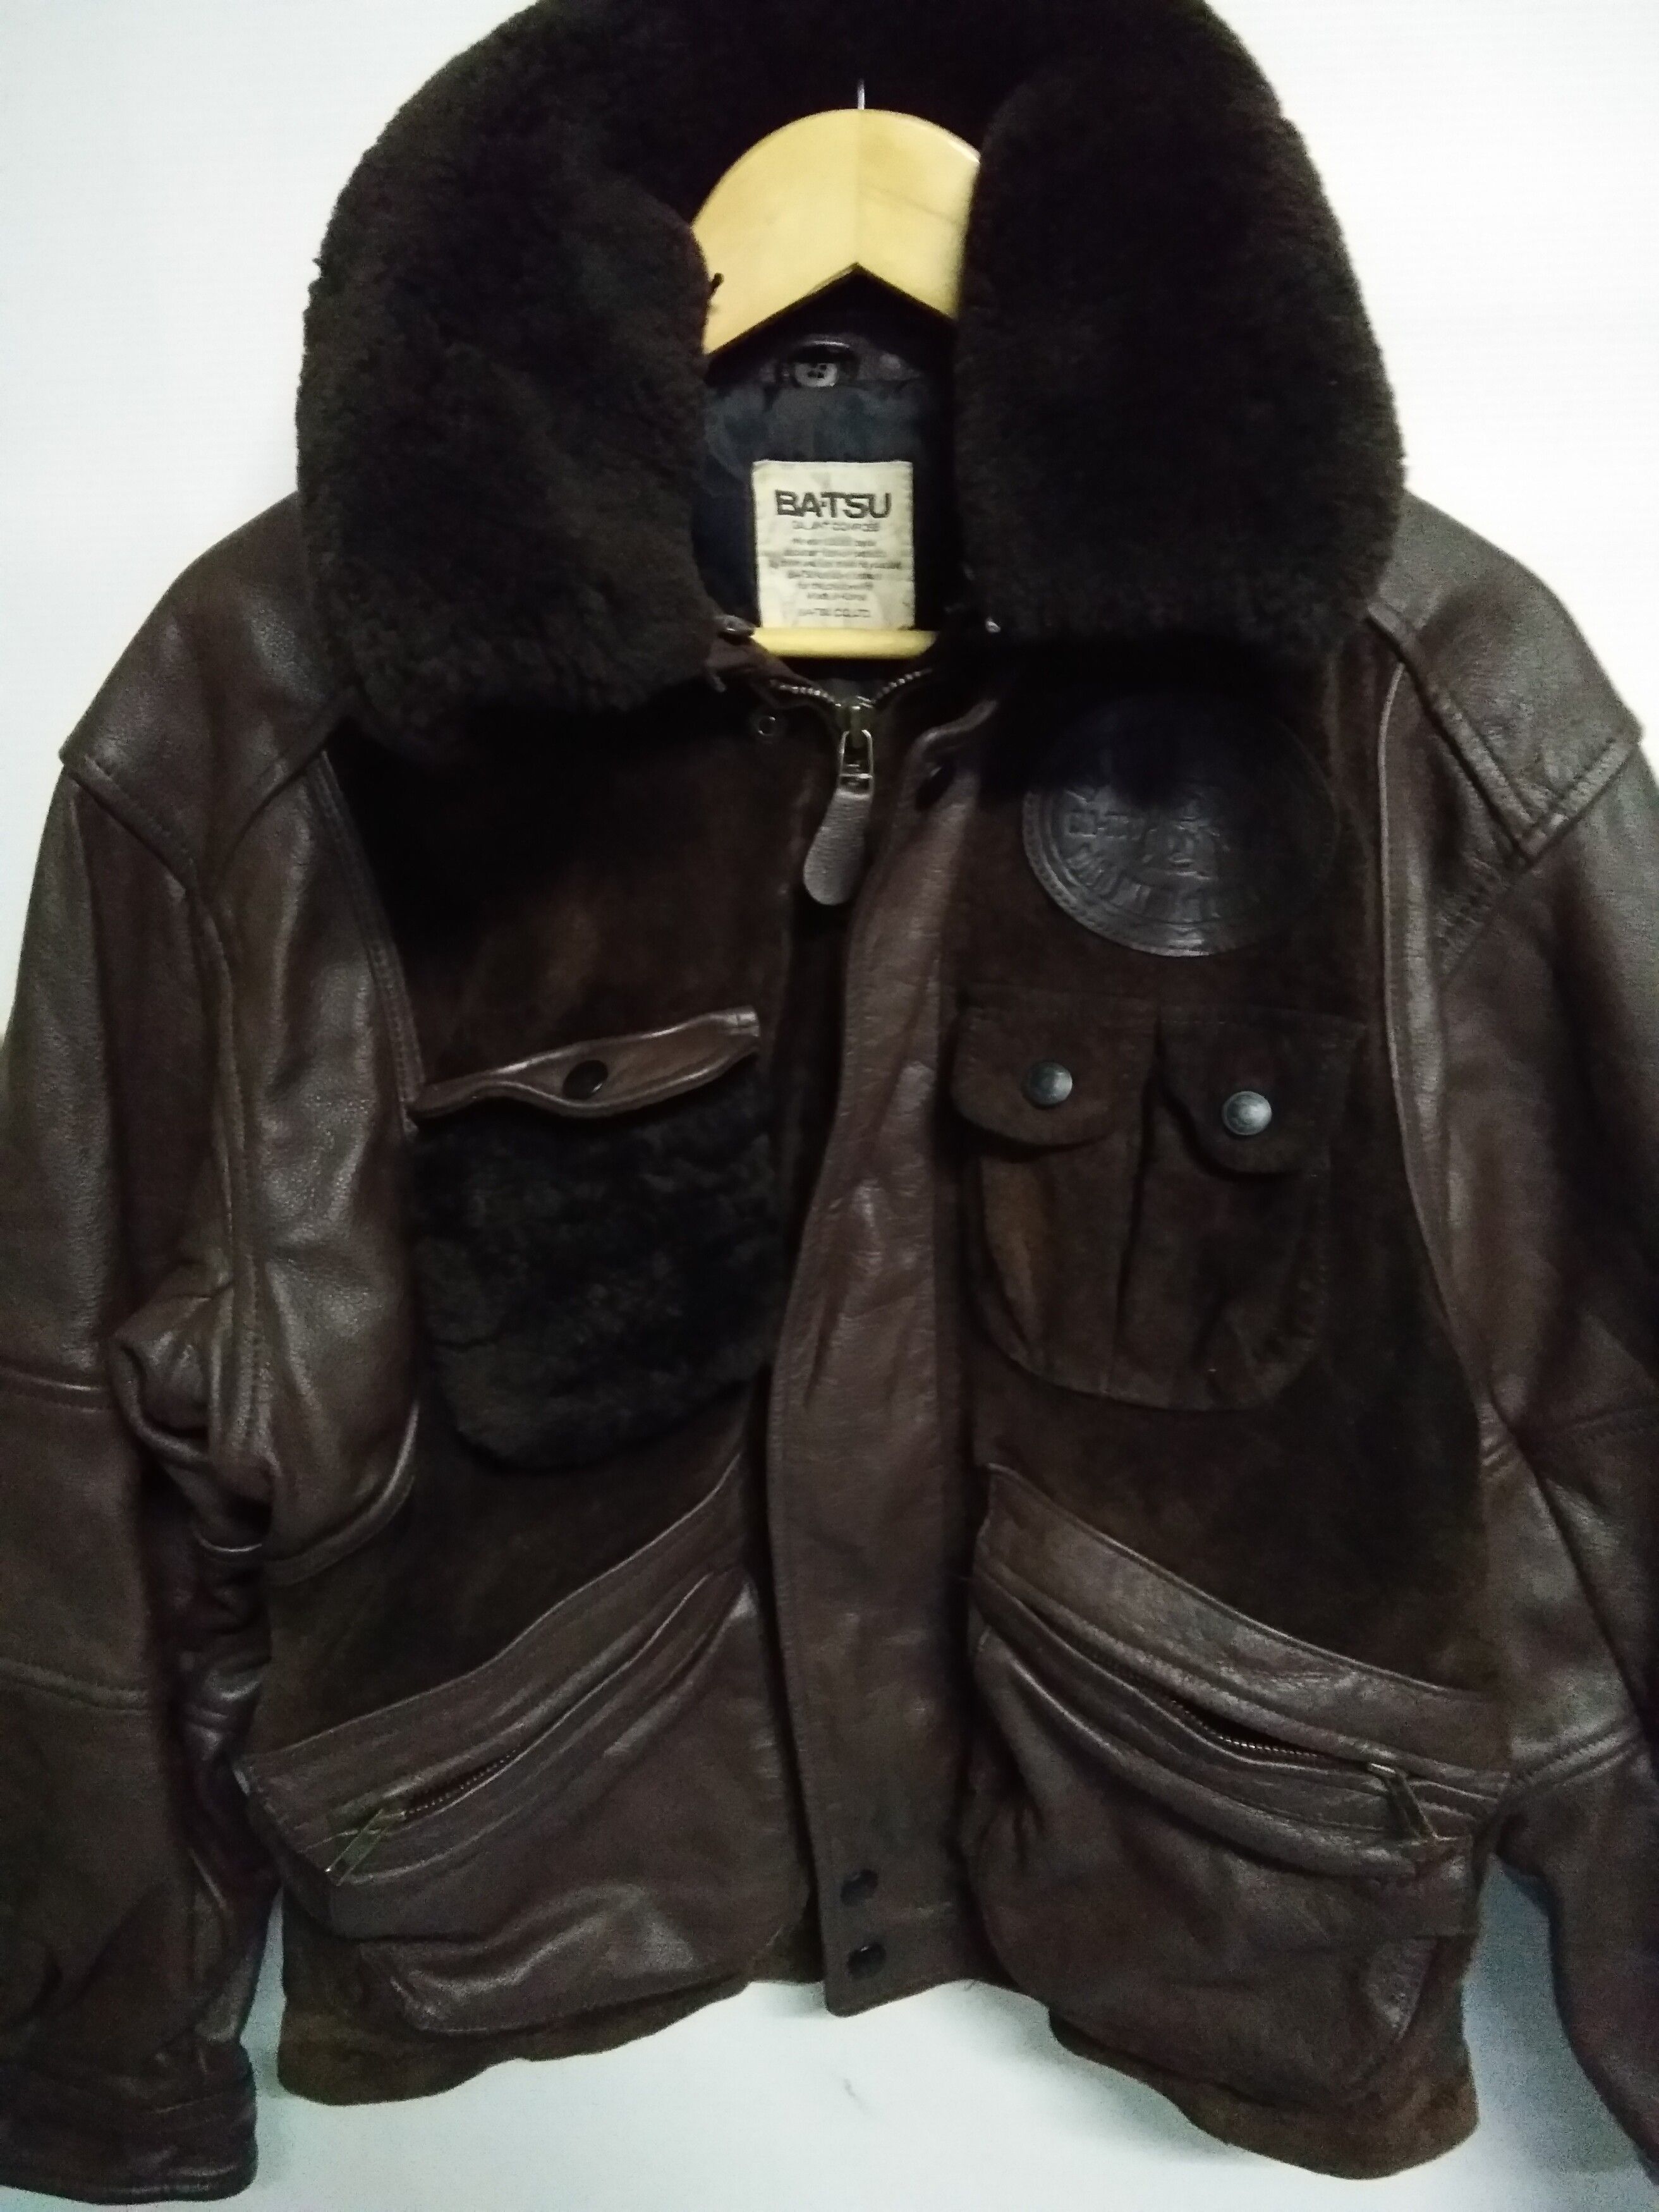 Japanese Brand Vintage Japanese Brand BA-TSU Leather Jacket Size US L / EU 52-54 / 3 - 6 Thumbnail